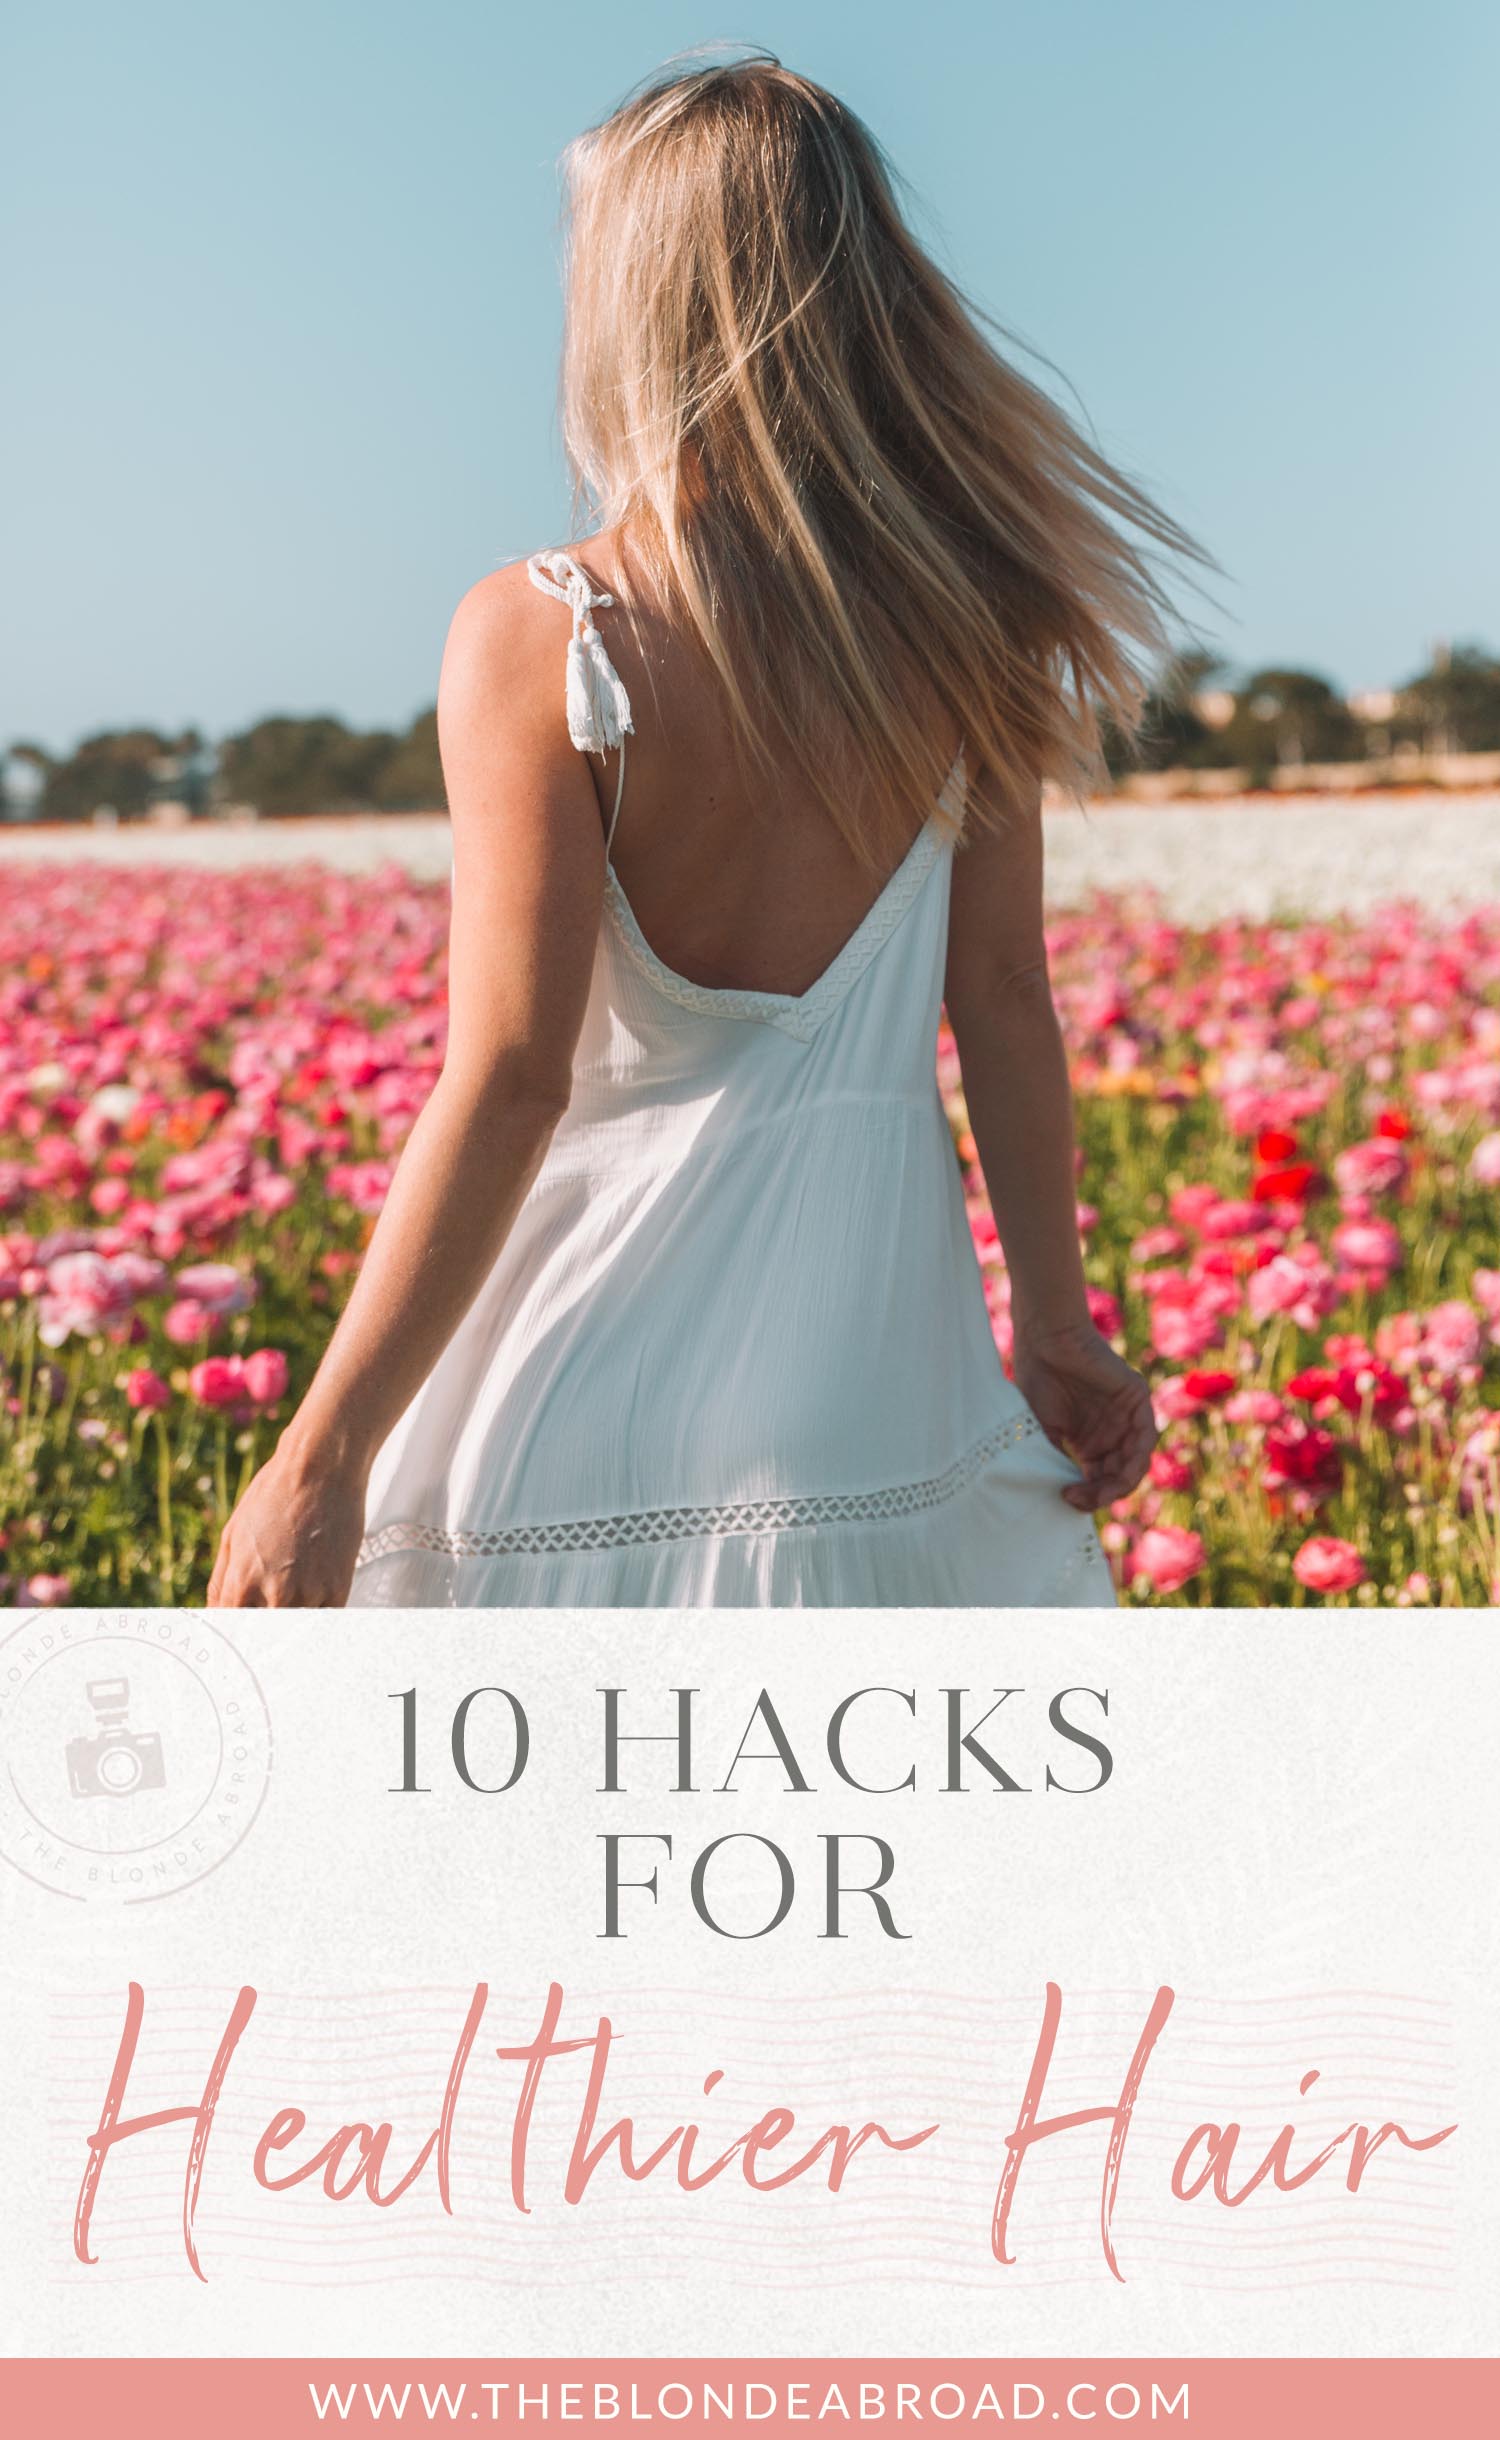 10 Hacks for Healthier Hair